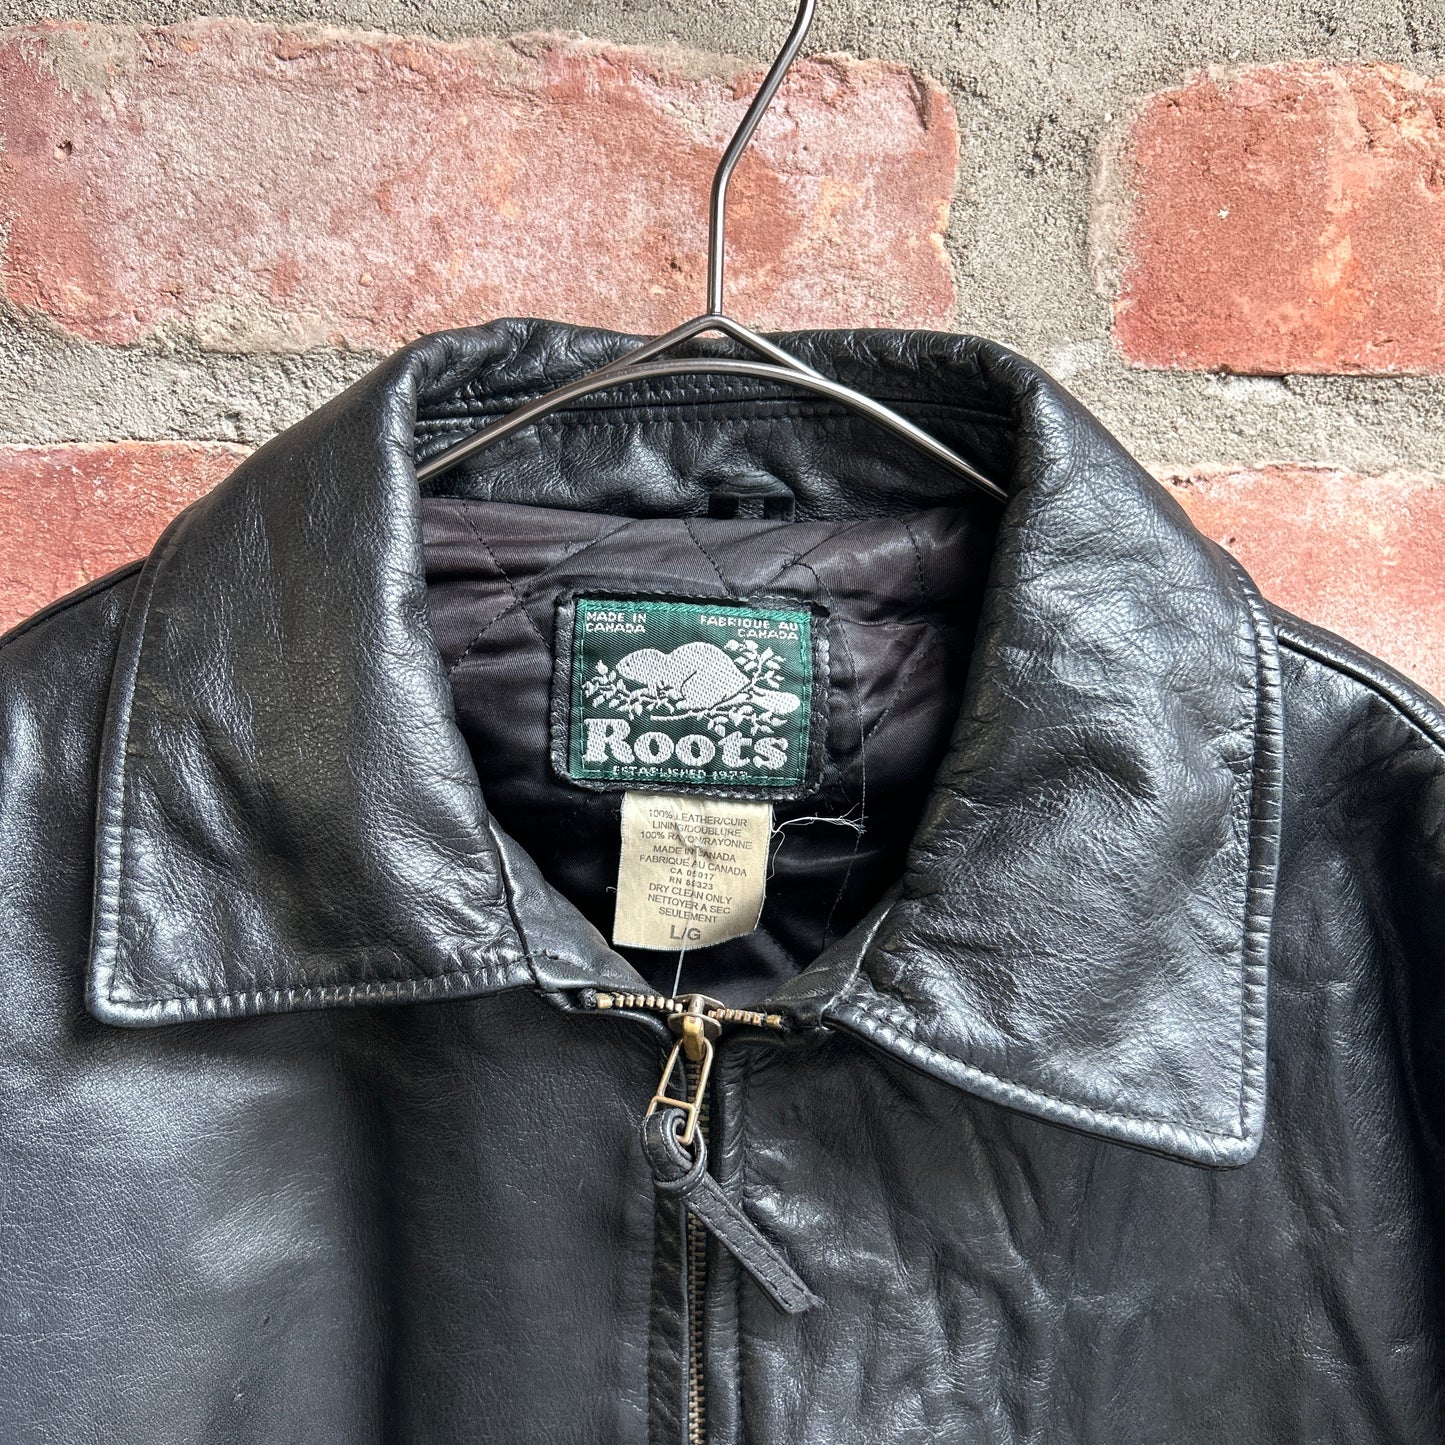 1980’s Bruce Lee Leather Jacket